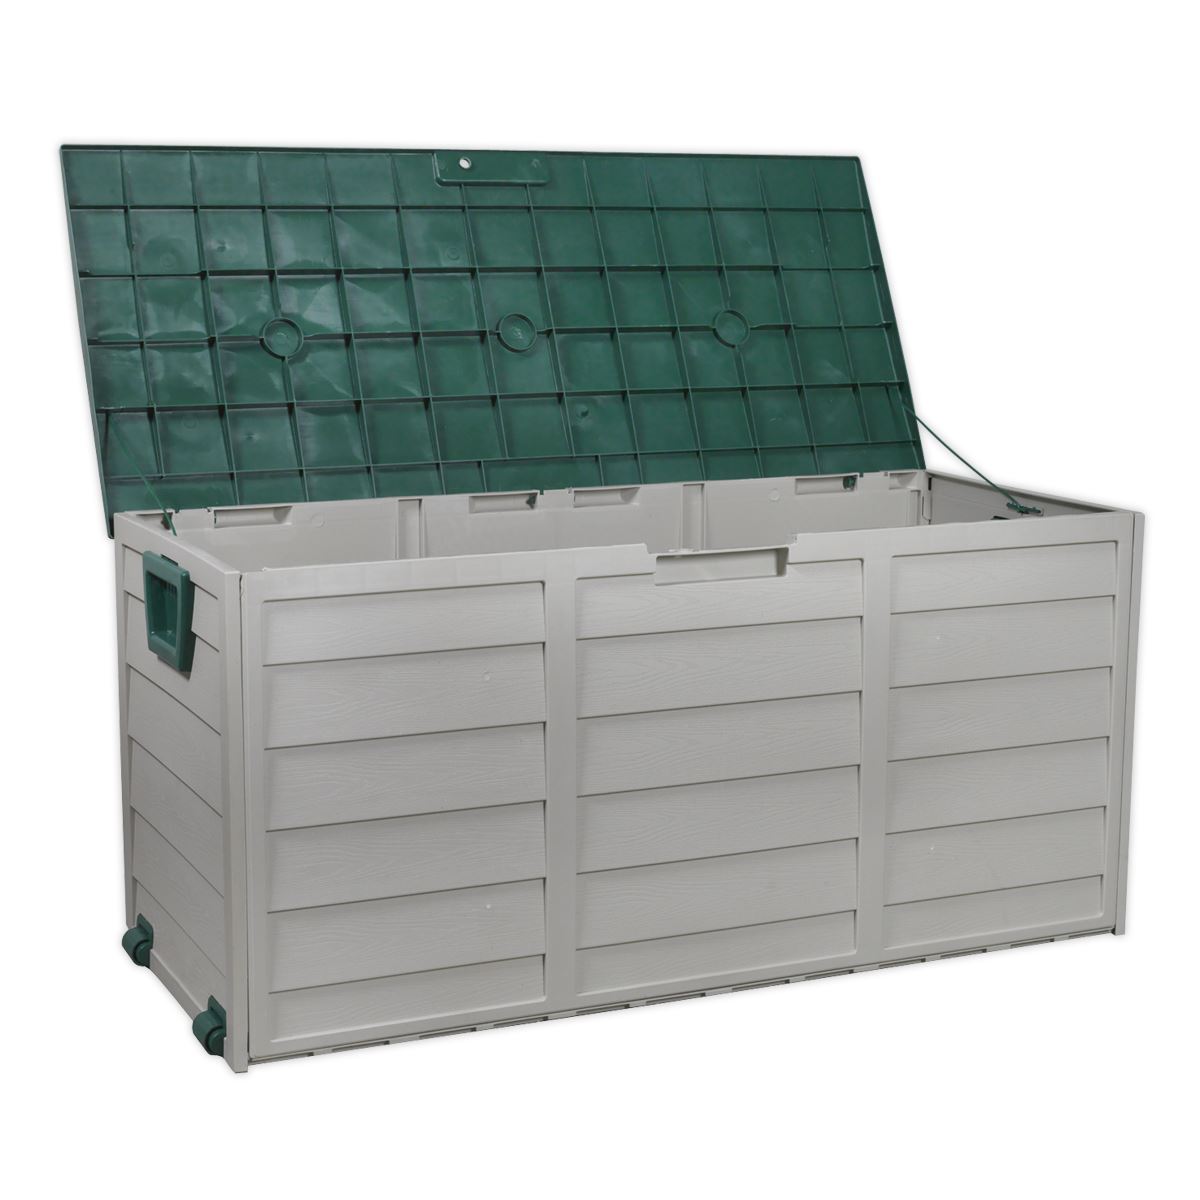 Sealey Outdoor Storage Box 460 x 1120 x 540mm Polypropylene